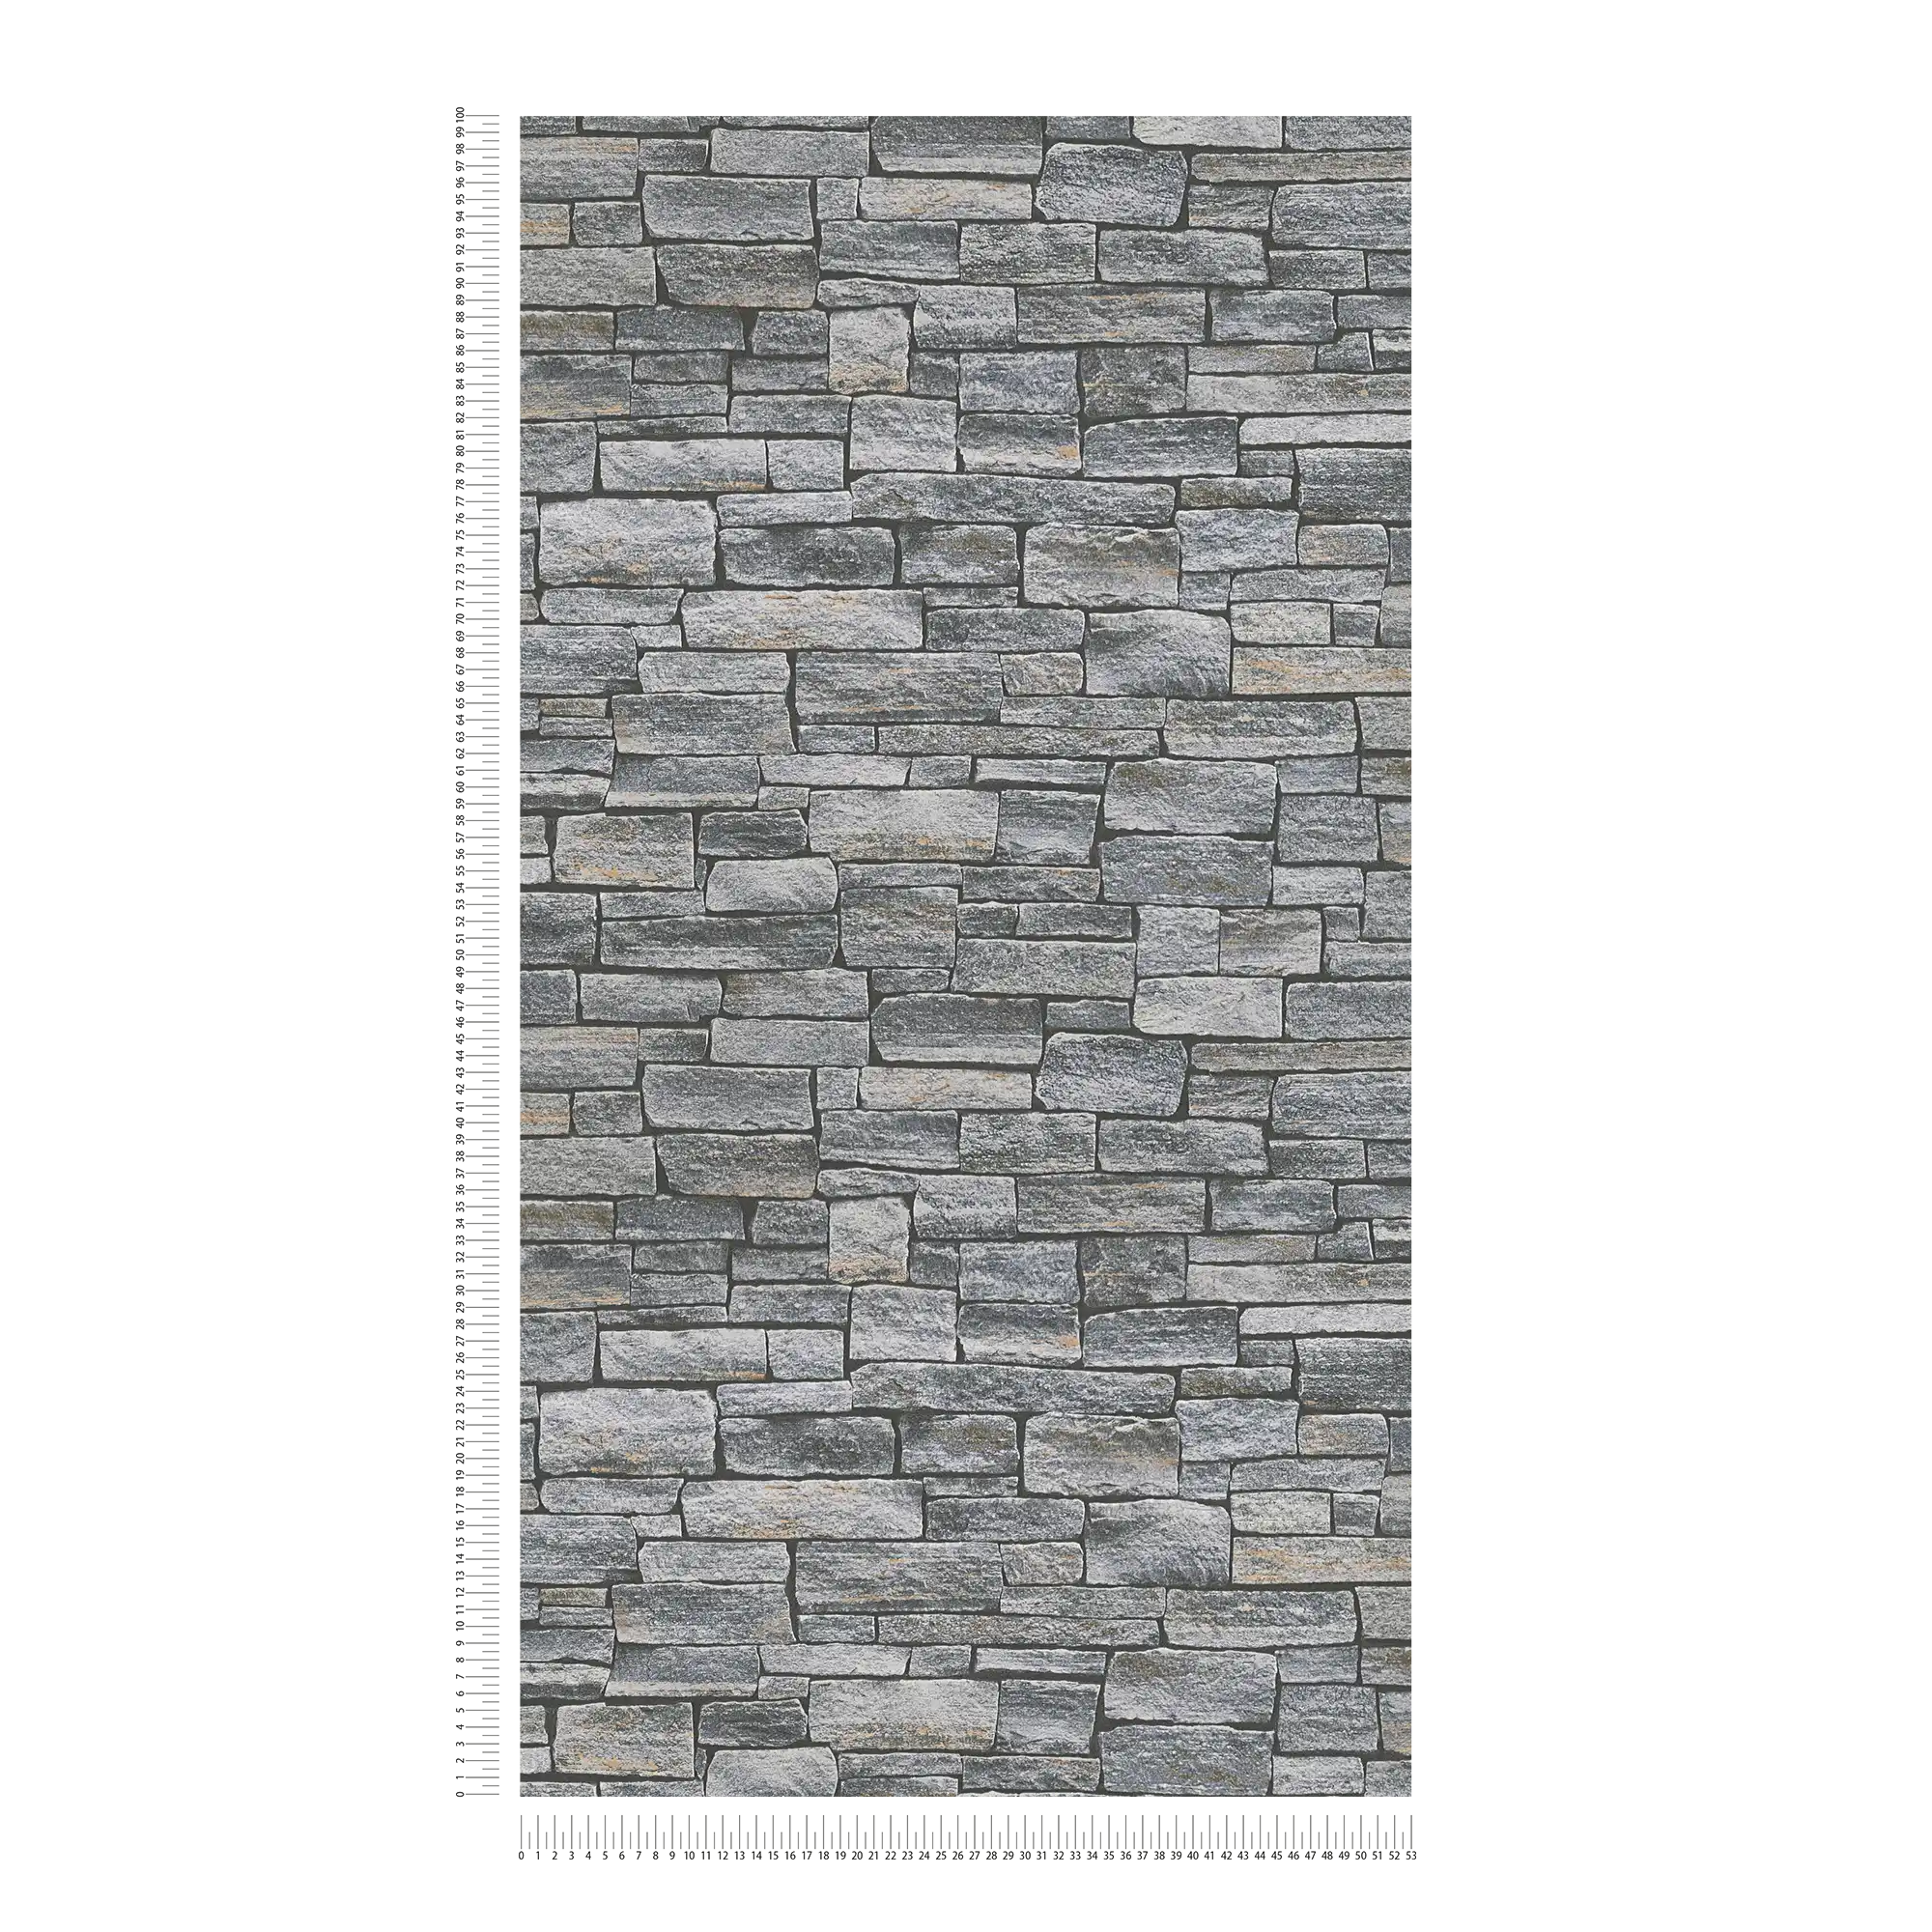             Wallpaper with stone look & natural wall motif - grey, black, brown
        